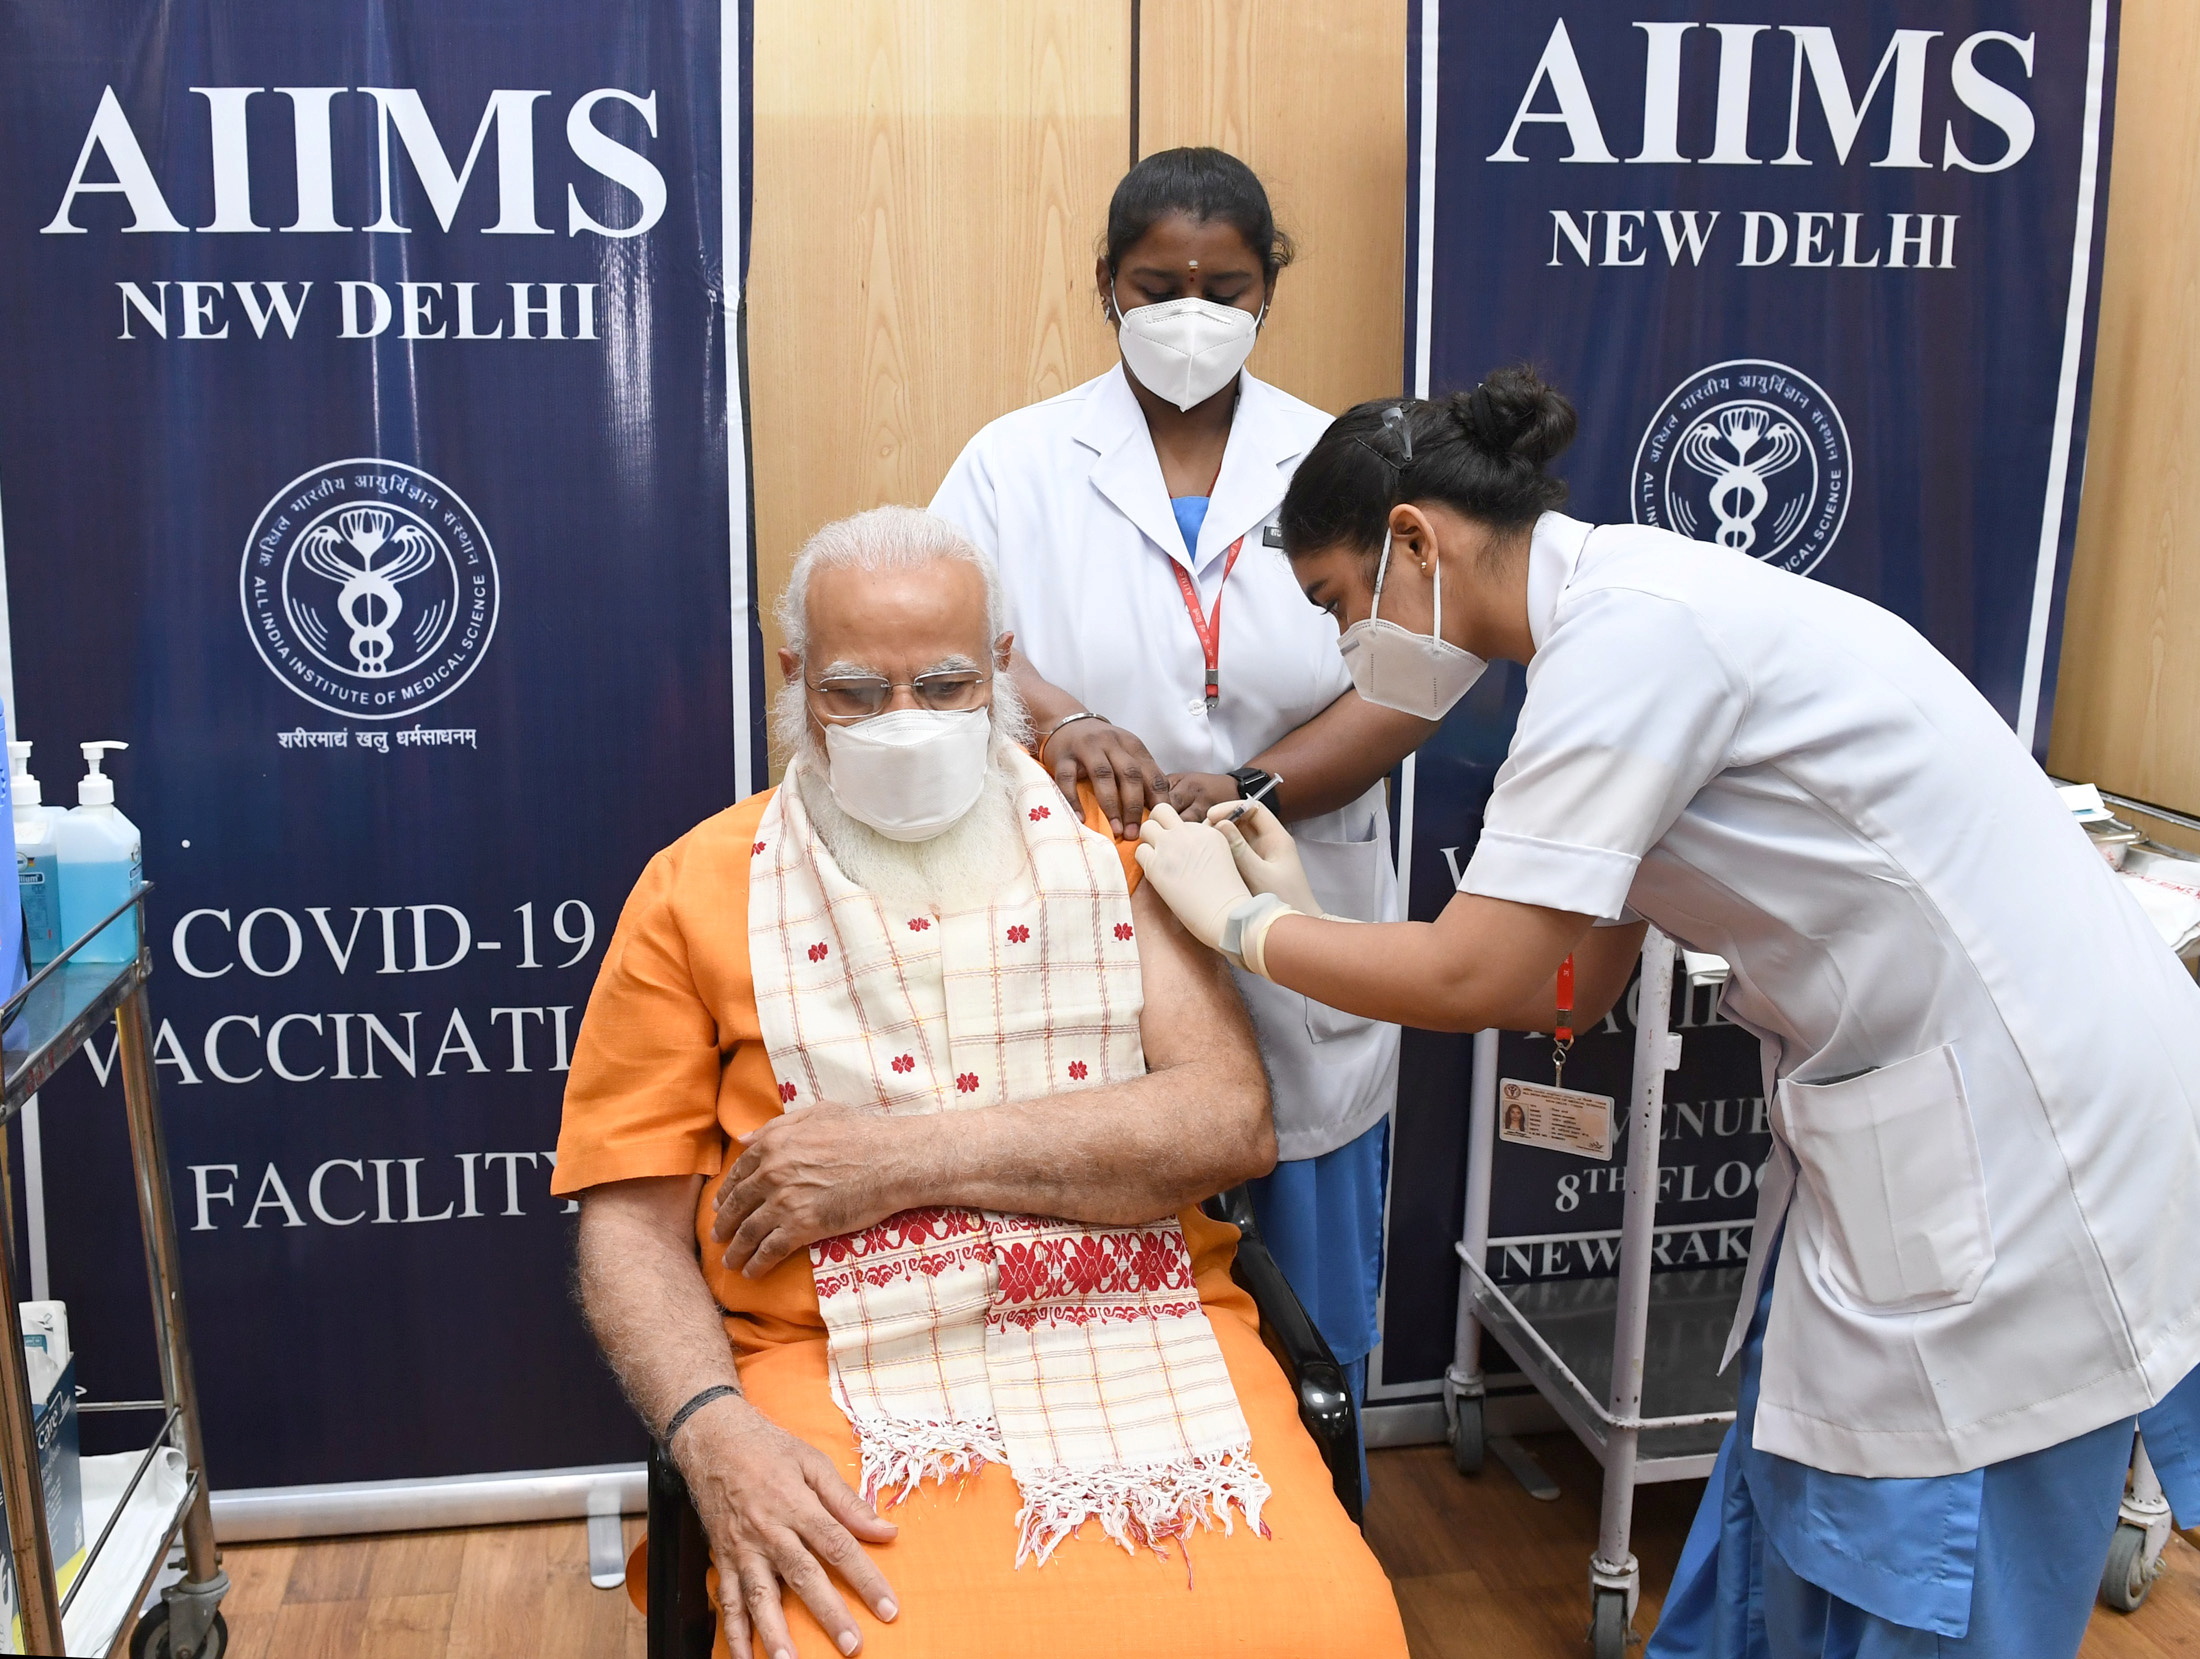 India's Prime Minister Narendra Modi receives his second dose of a coronavirus disease (COVID-19) vaccine at the All India Institute of Medical Sciences (AIIMS) hospital in New Delhi, India, April 8, 2021. India's Press Information Bureau/Handout via REUTERS